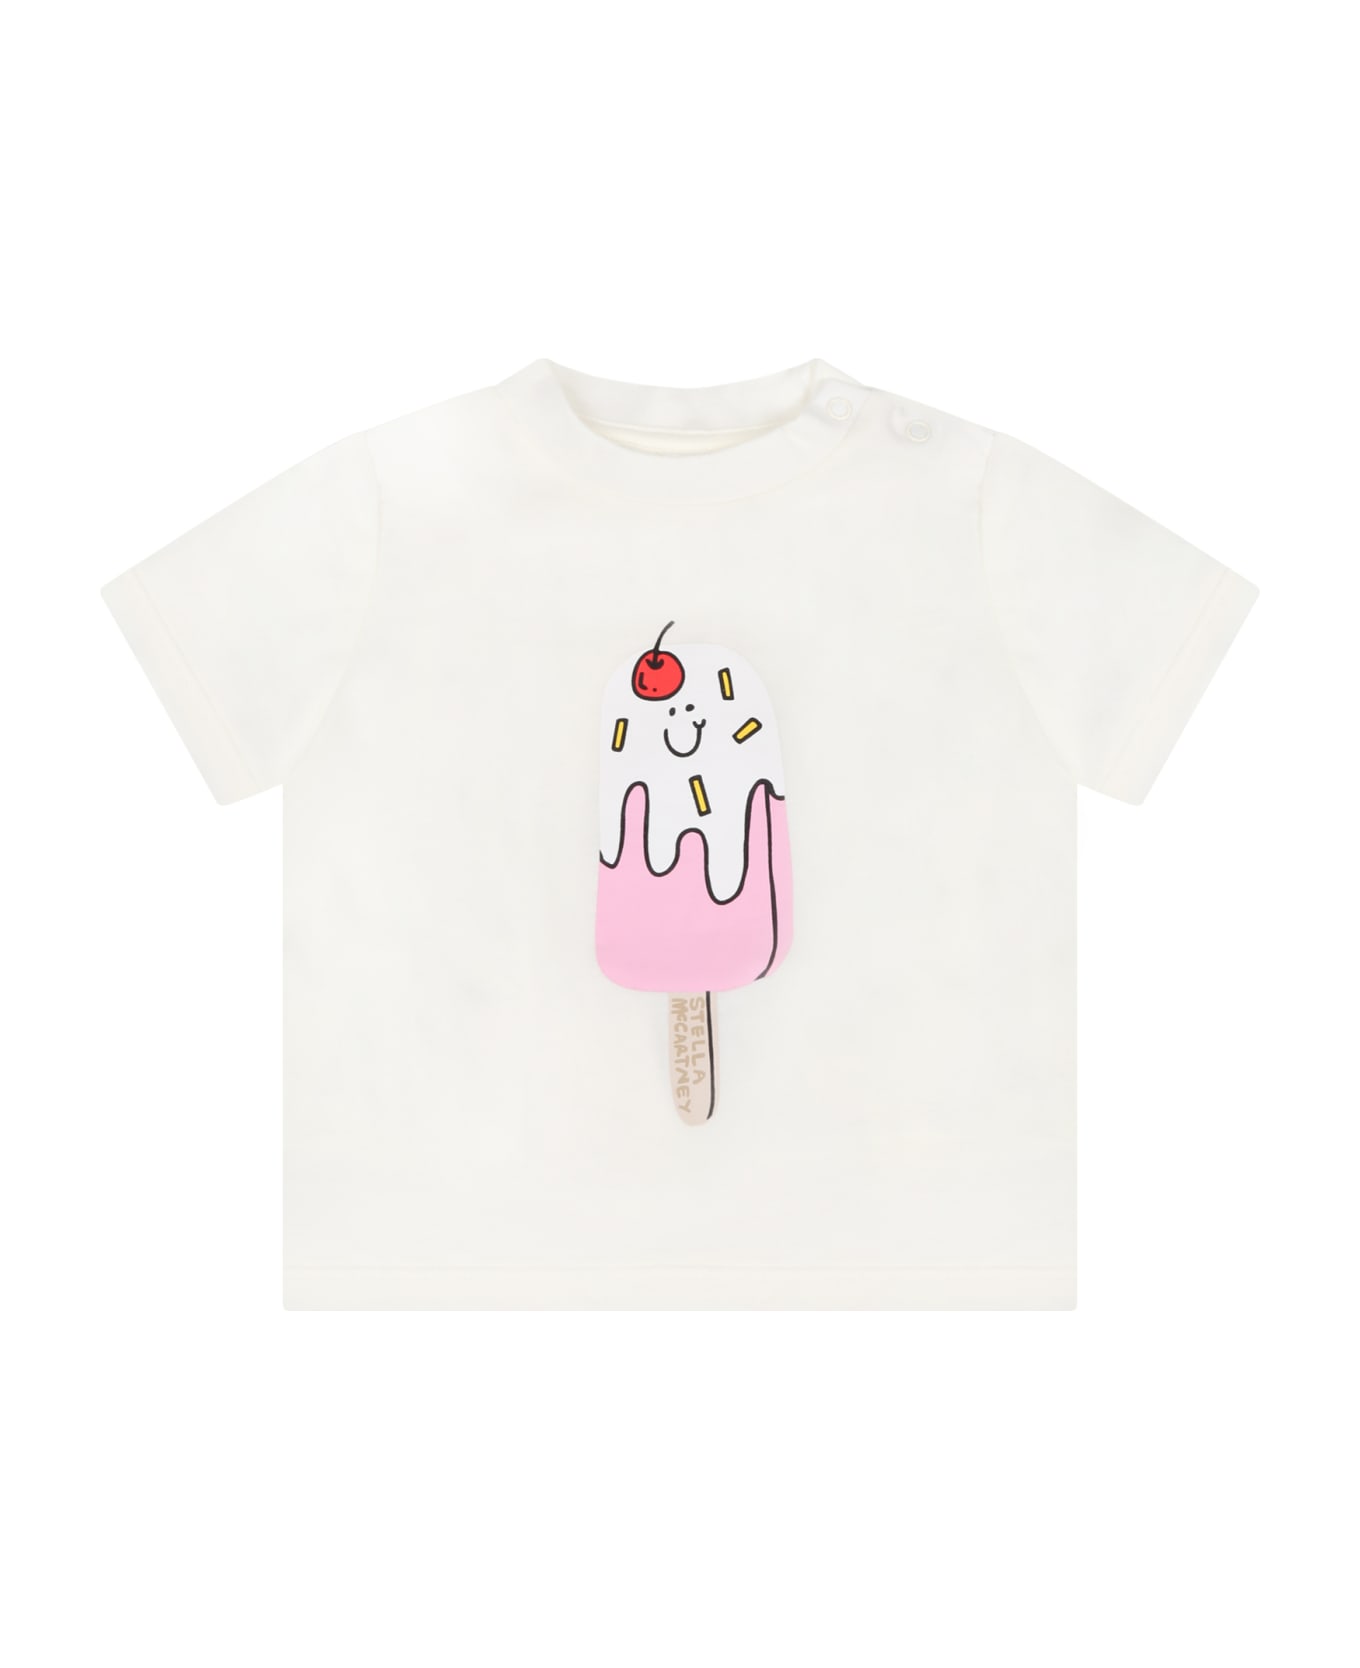 Stella McCartney Kids Ivory T-shirt For Baby Girl With Ice Cream - Ivory